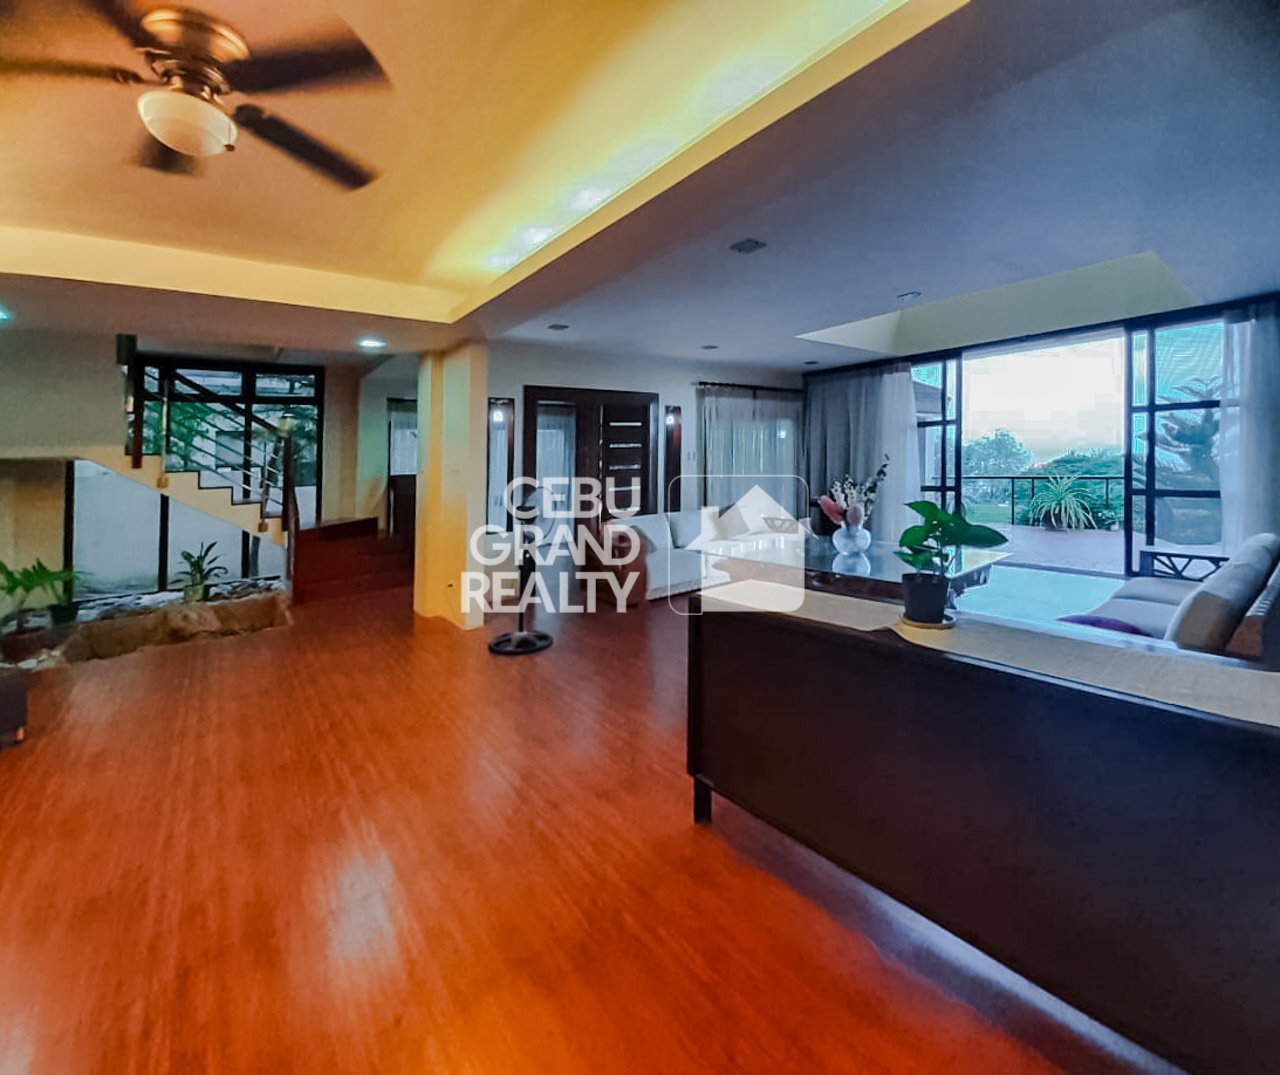 SRBAM3 6 Bedroom House for Sale in Amara Liloan - Cebu Grand Realty (8)